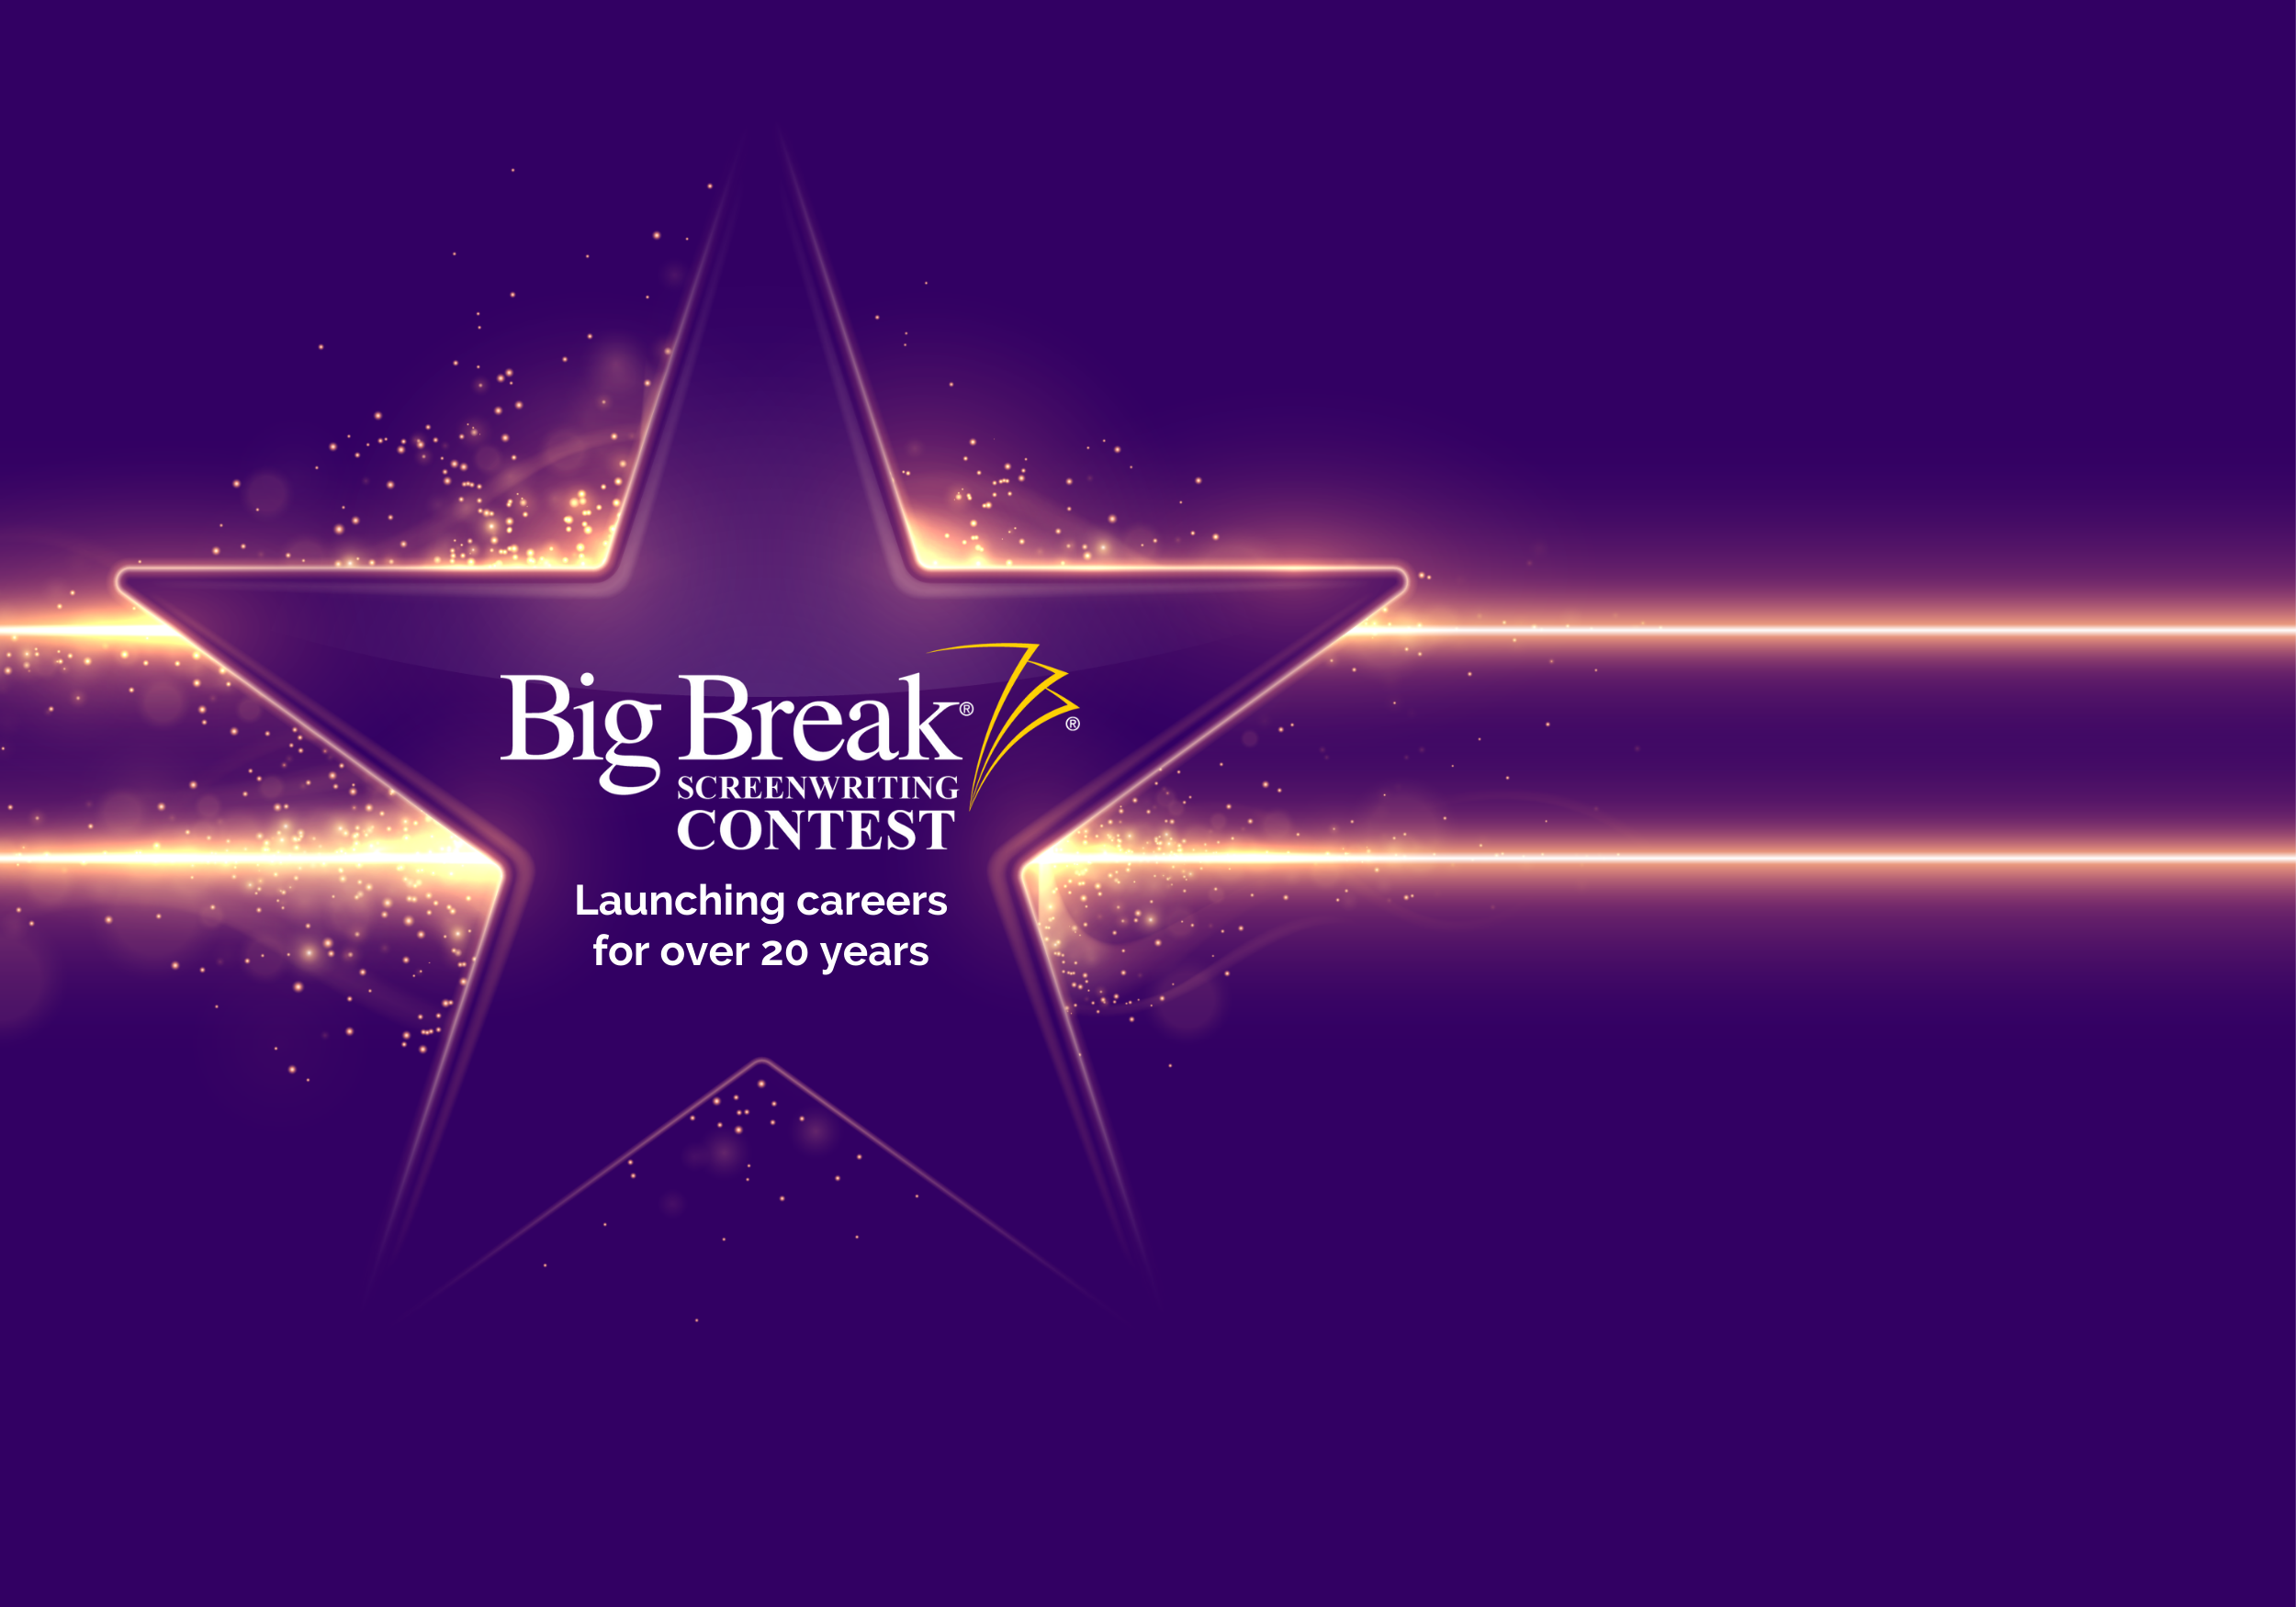 Big Break: Screenwriting Contest for Career Success